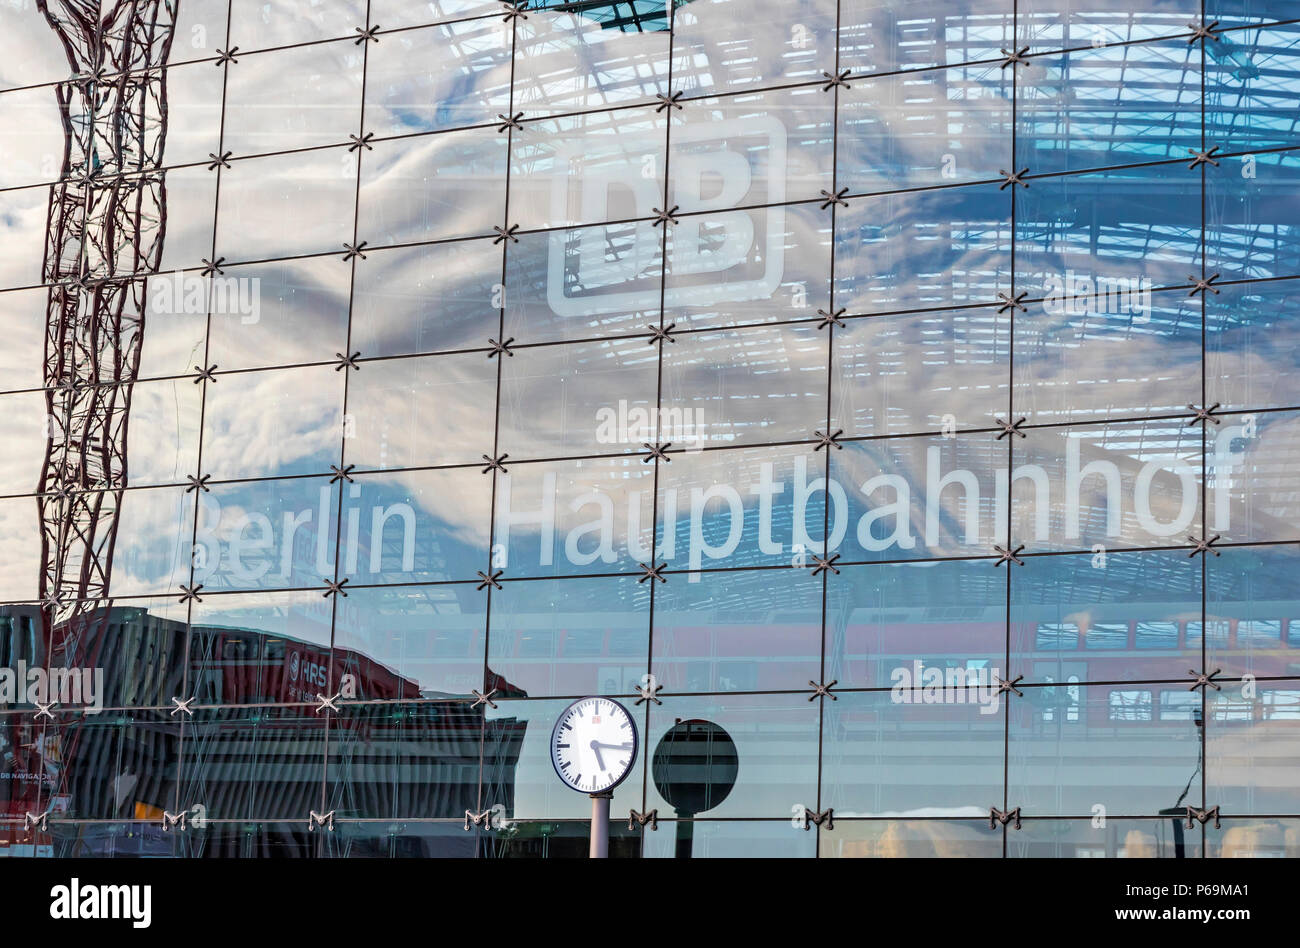 BERLIN, GERMANY - SEPTEMBER 20, 2017: Close-up facade view of Berlin Central Railway Station (Berlin Hauptbahnhof, Berlin Hbf), Germany. Station opene Stock Photo